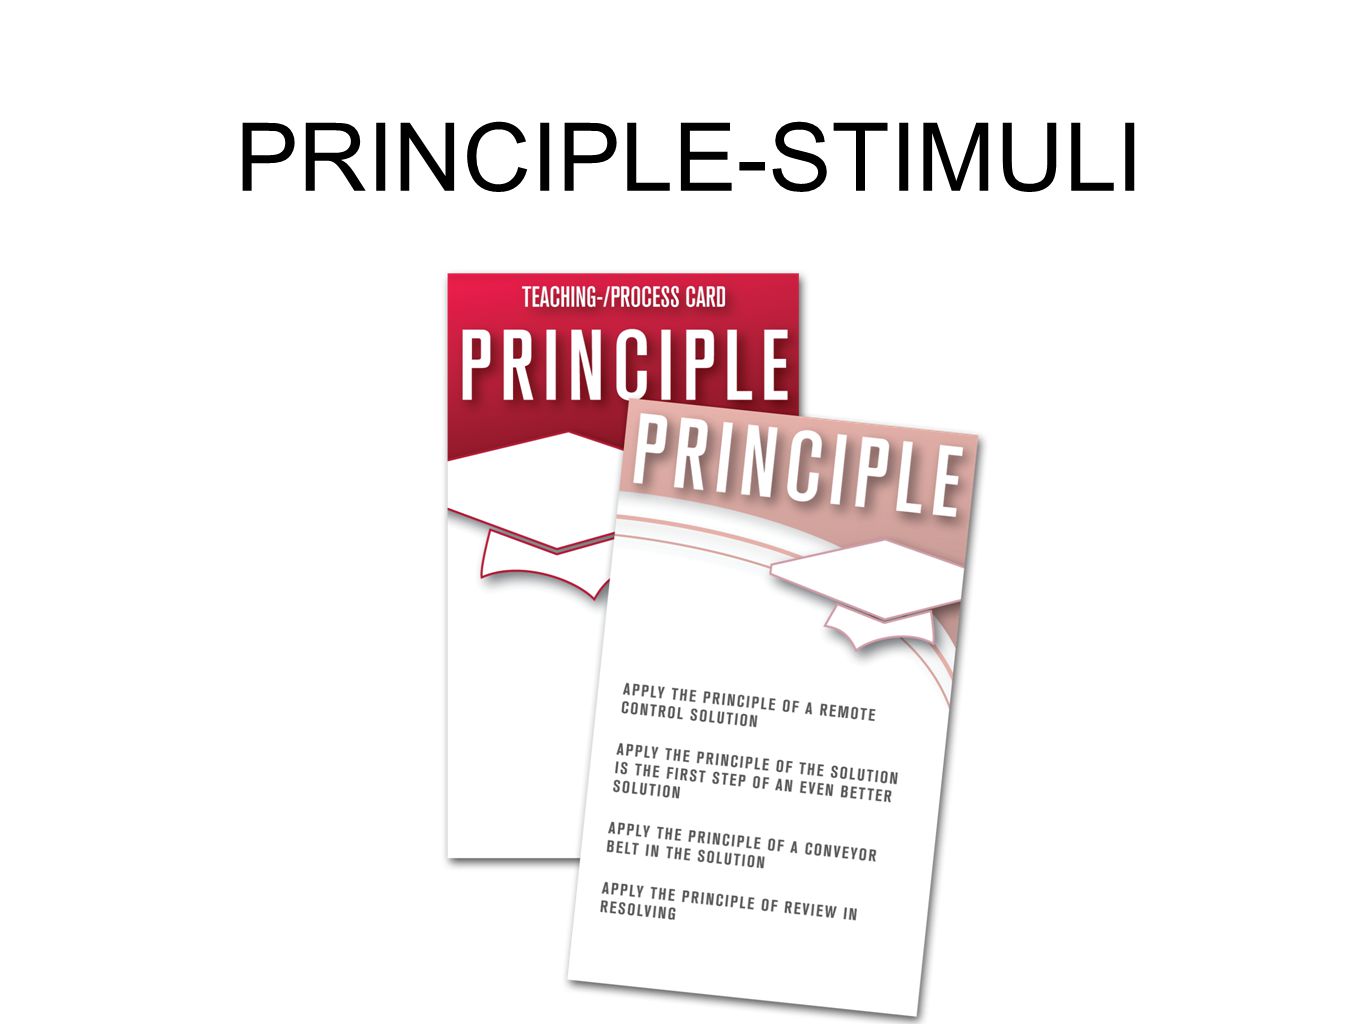 PRINCIPLE-STIMULI